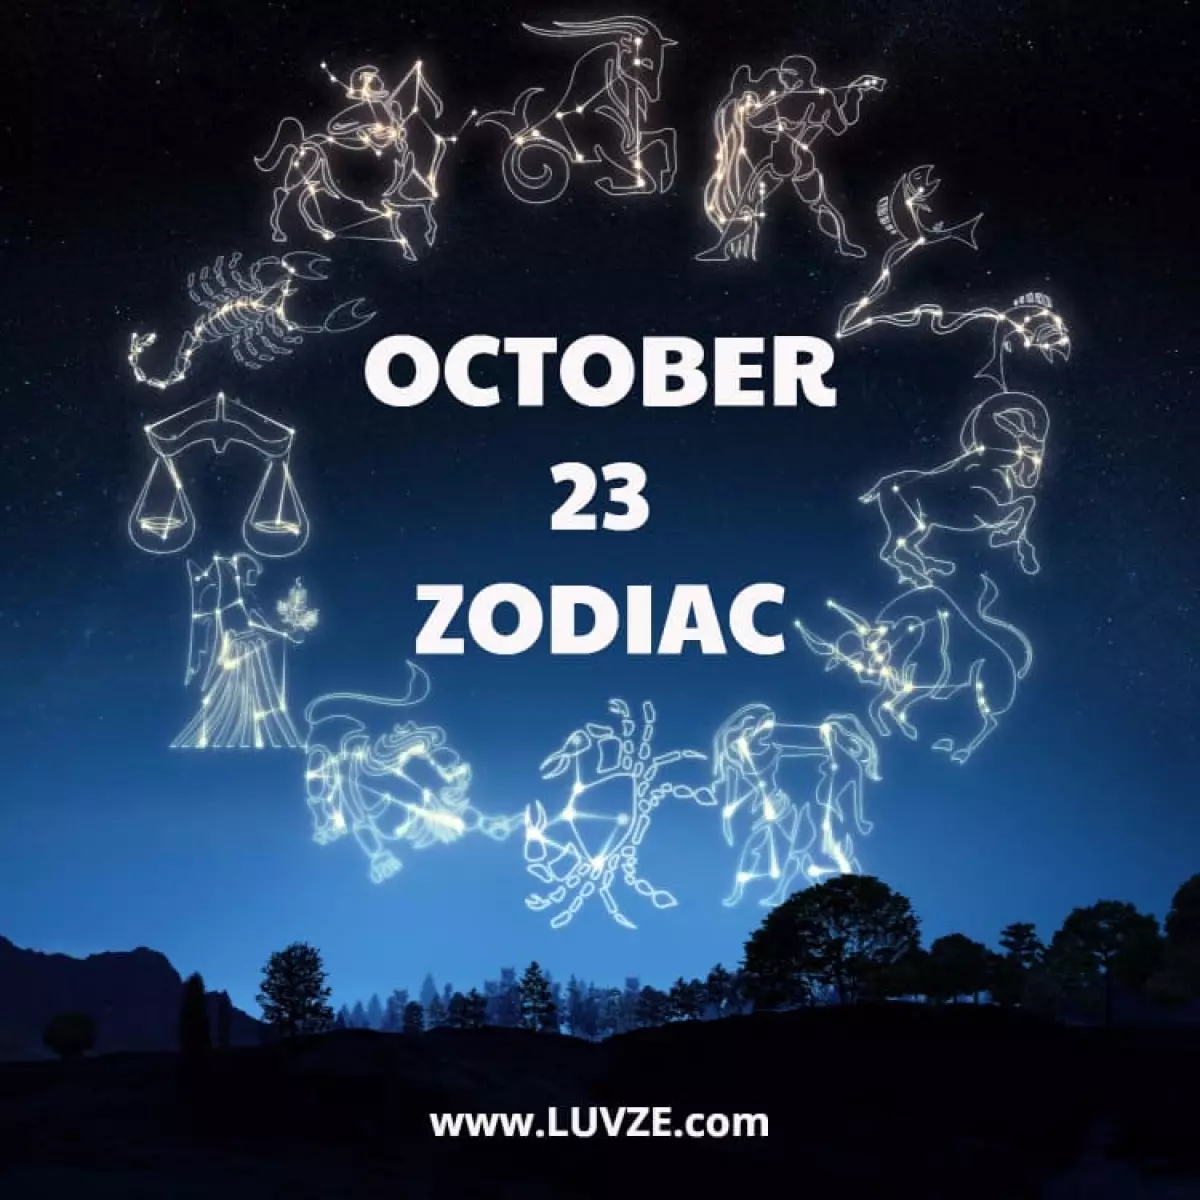 October 23 zodiac